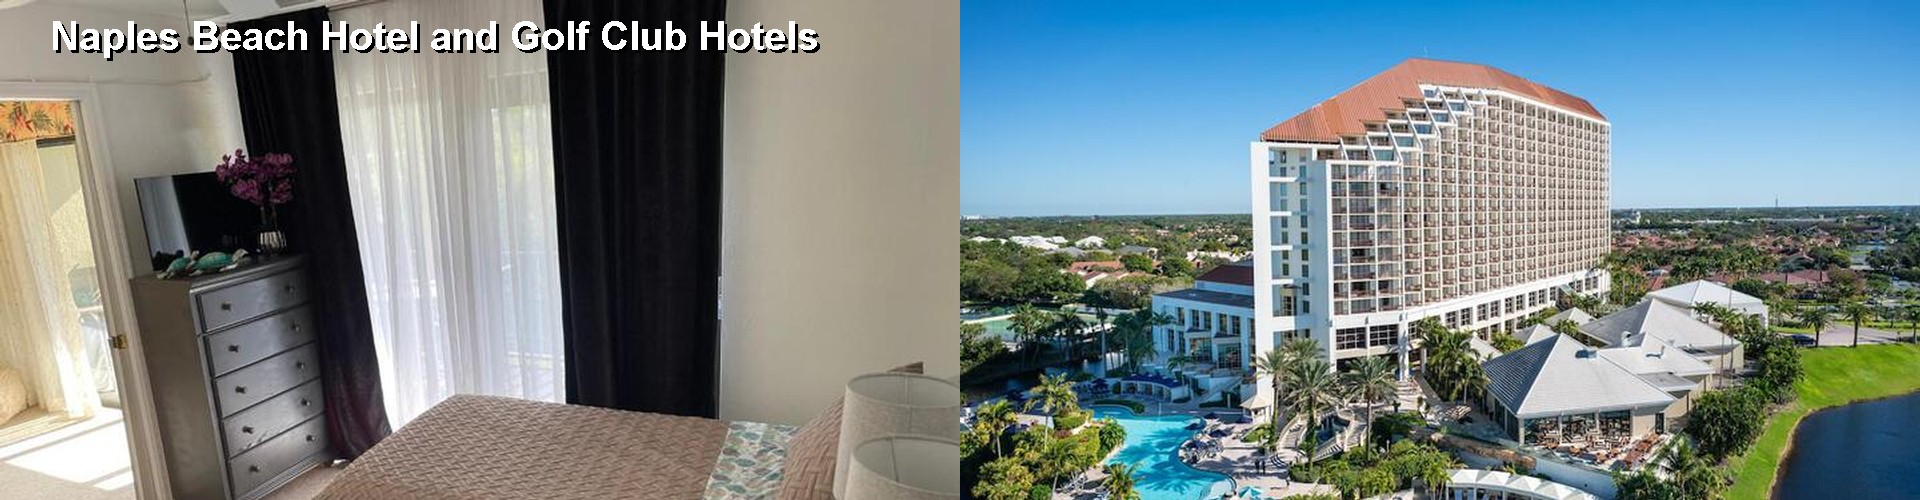 5 Best Hotels near Naples Beach Hotel and Golf Club